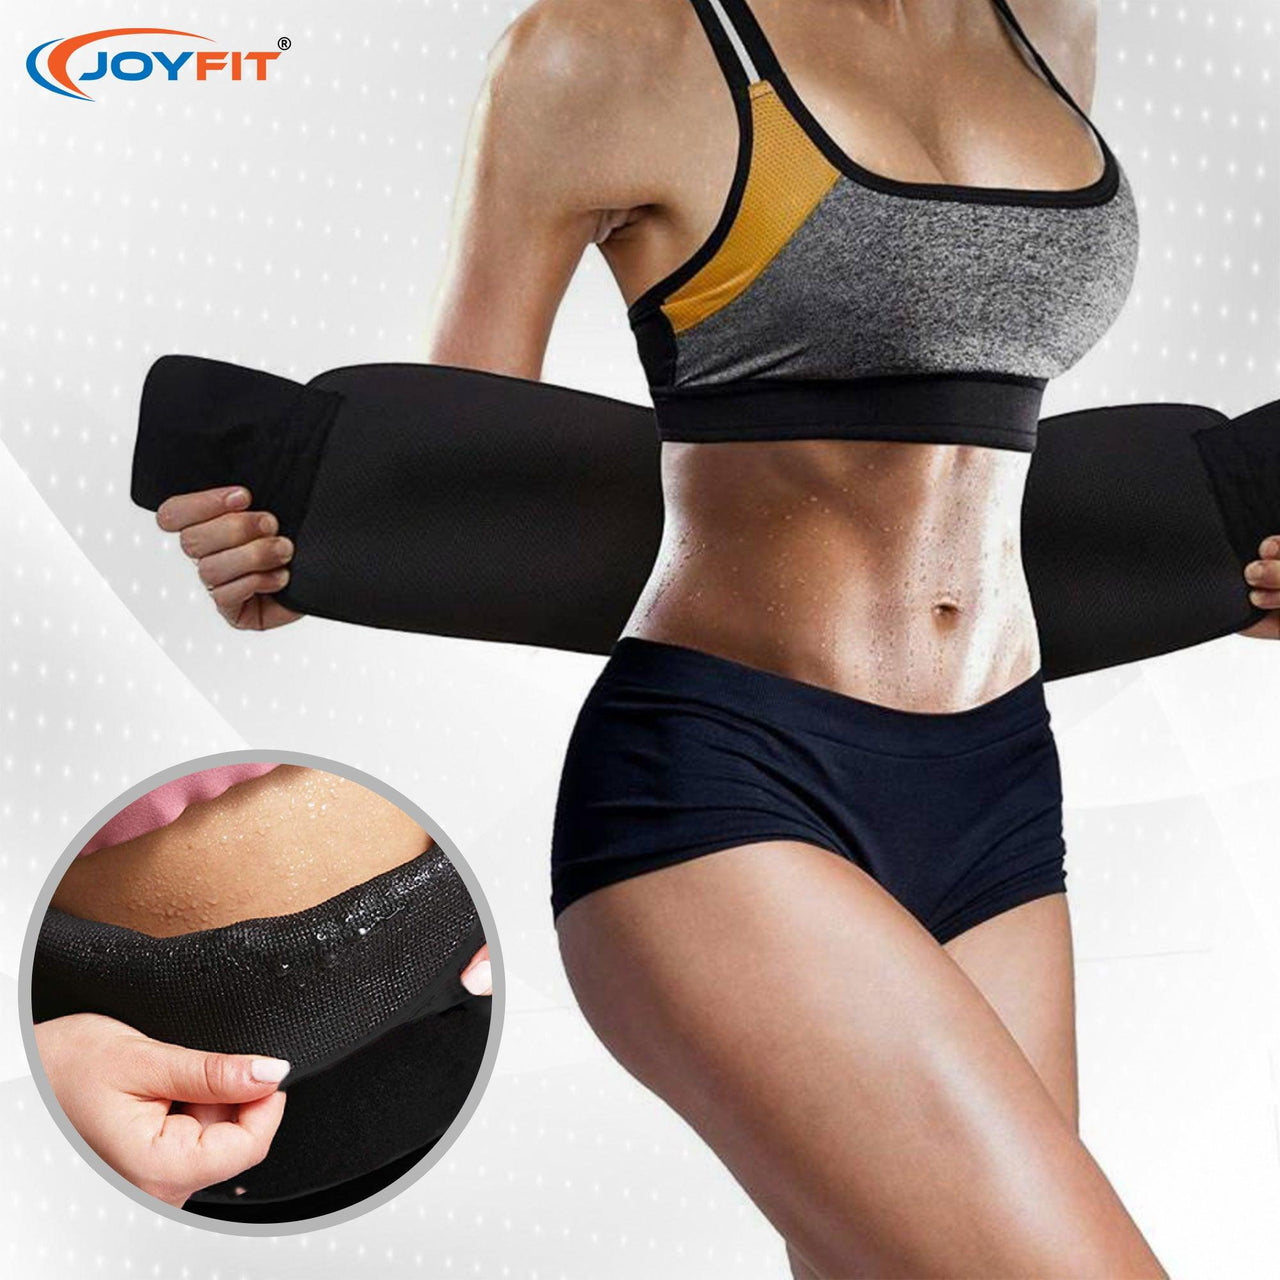 Sports Sweat Belt Premium Waist Trimmer for Women Belly Fat Burner